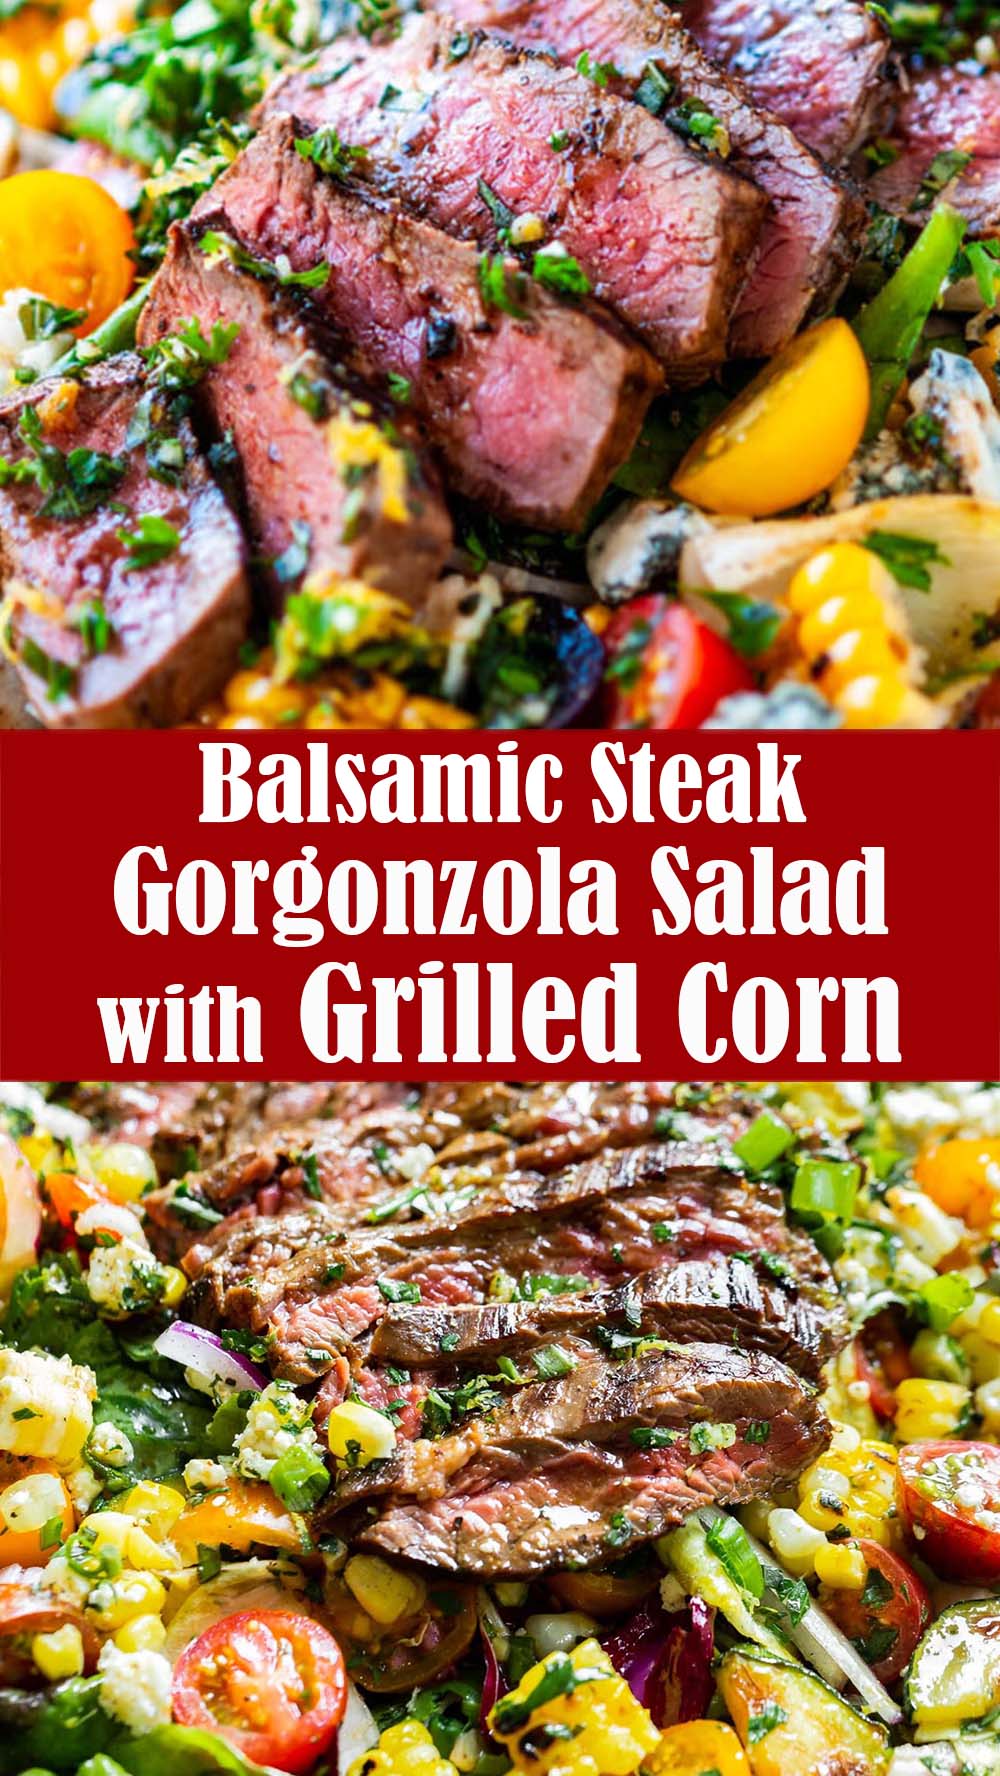 Balsamic Steak Gorgonzola Salad with Grilled Corn